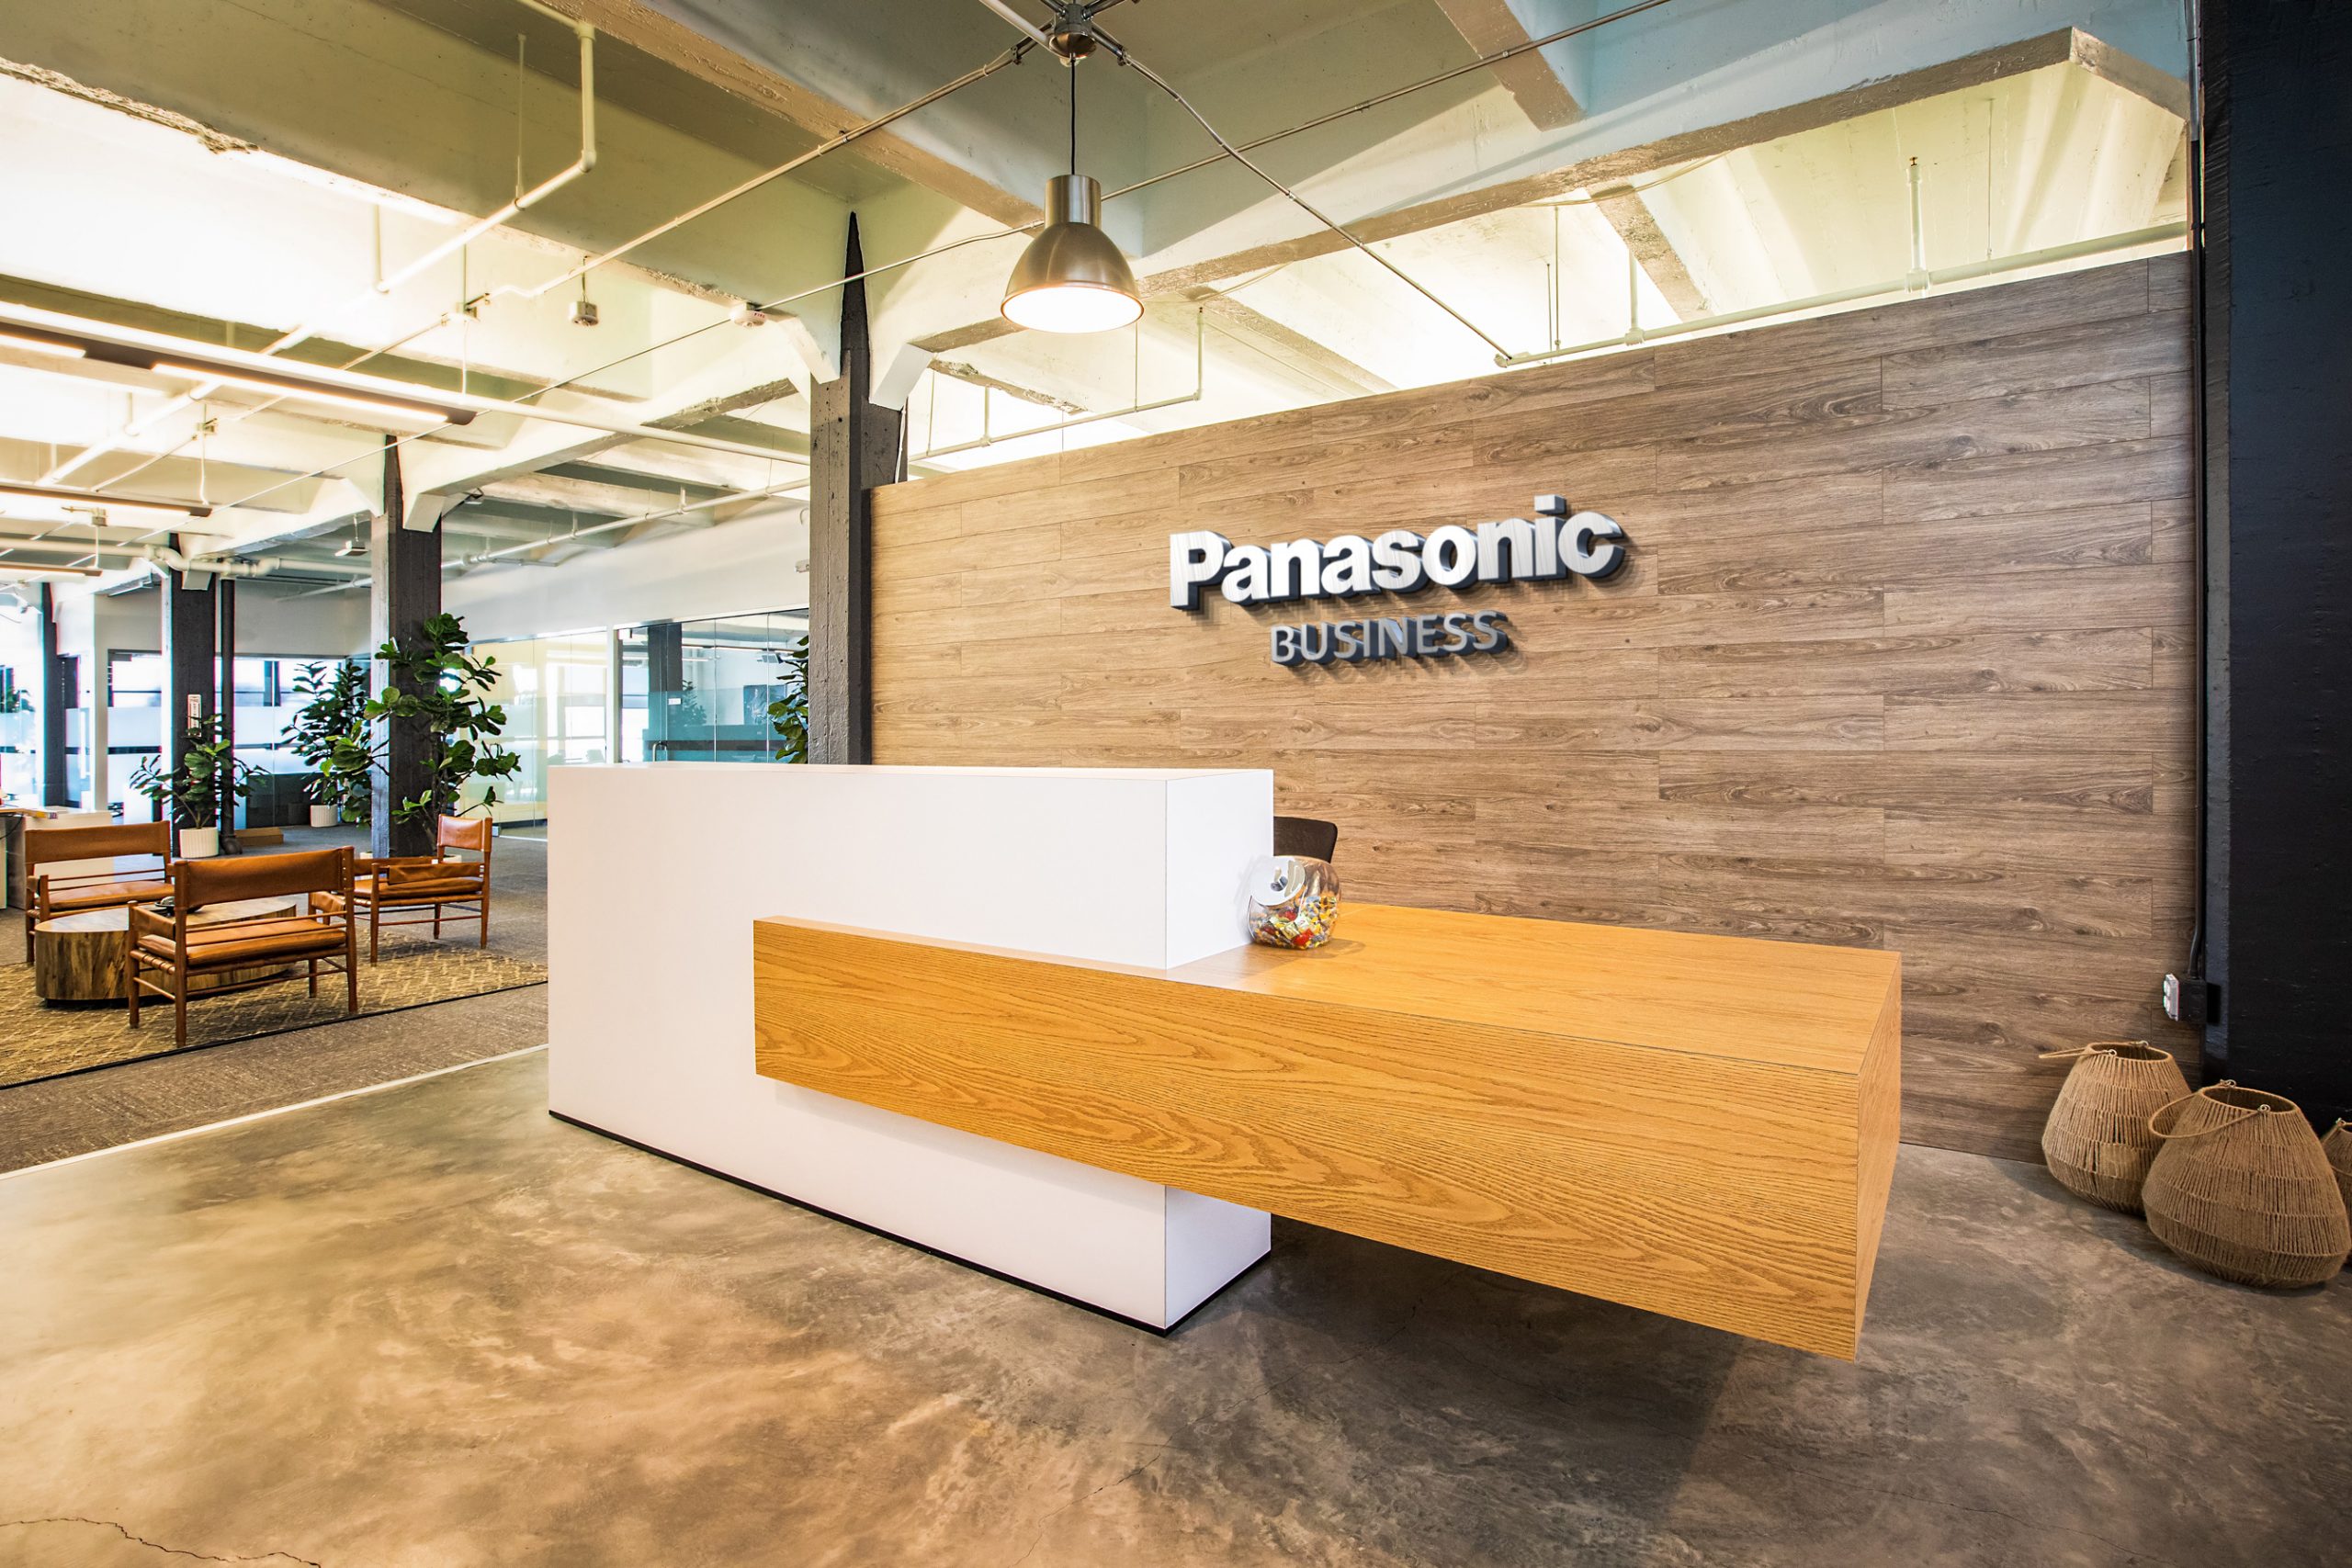 Panasonic-Business-Logo-Free-Reception-Desk-Mockup